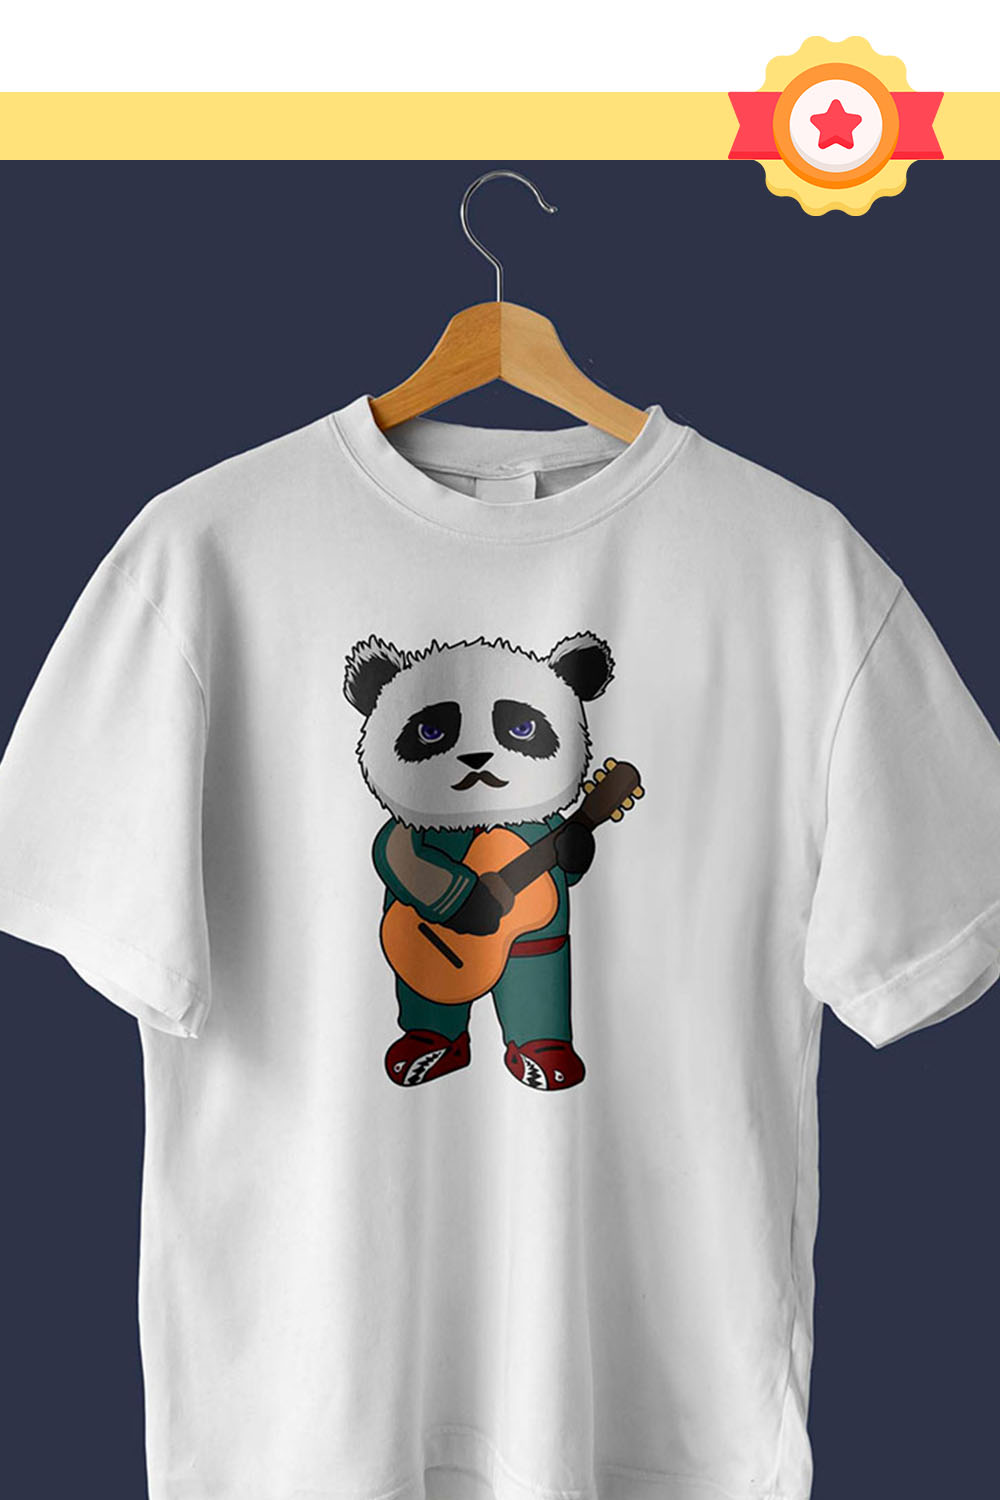 Panda Guitar Illustration Pinterest image.